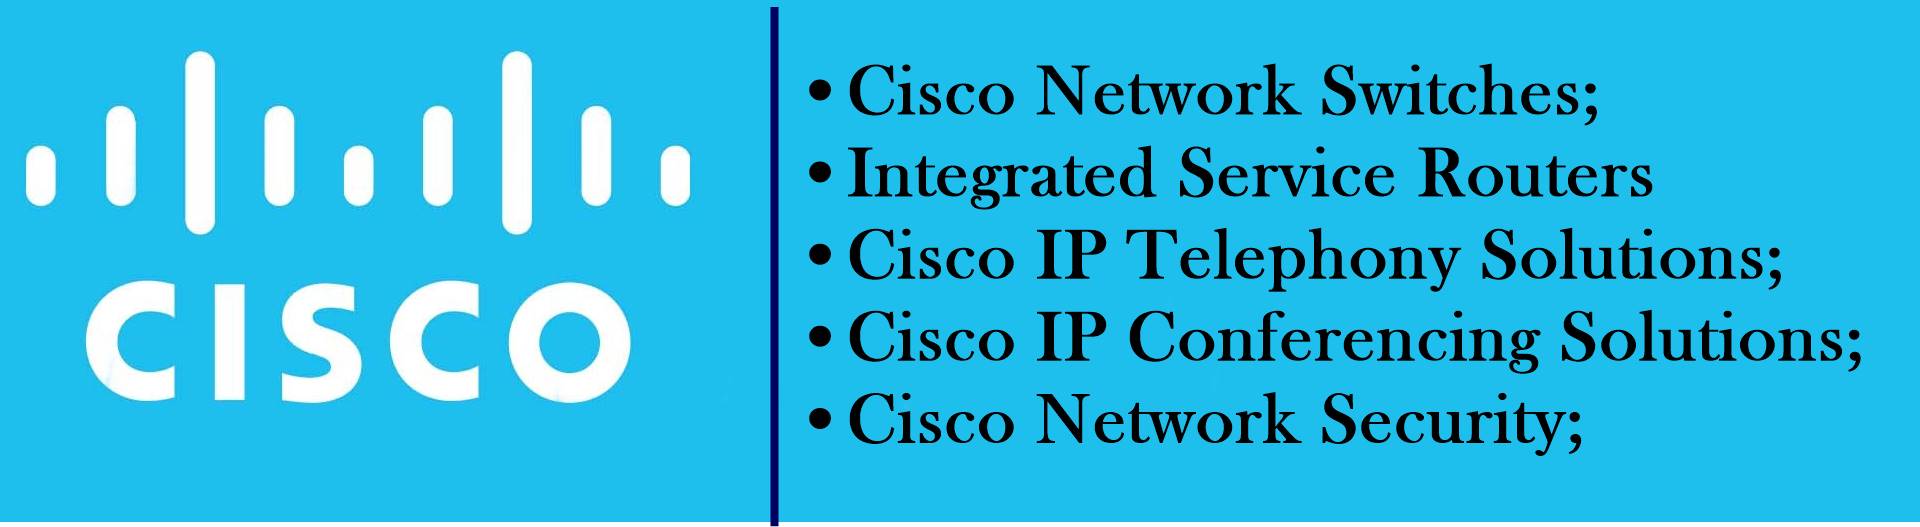 Cisco Networking Solutions in Kenya